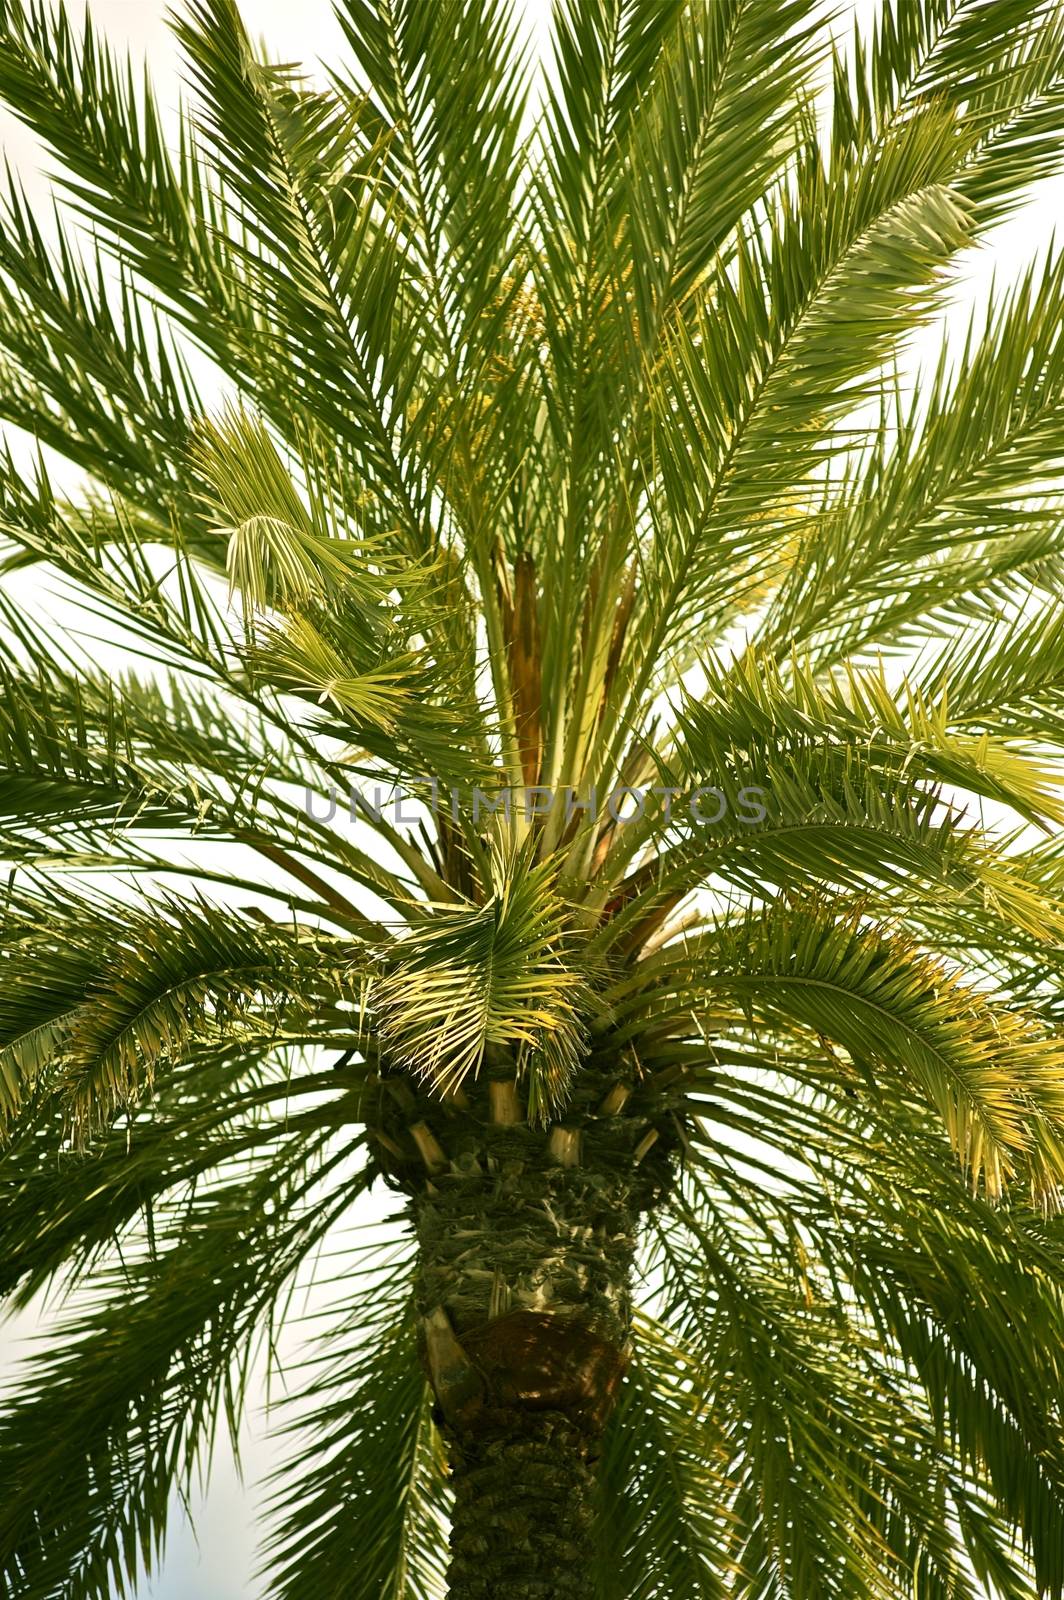 Canary Palm by welcomia